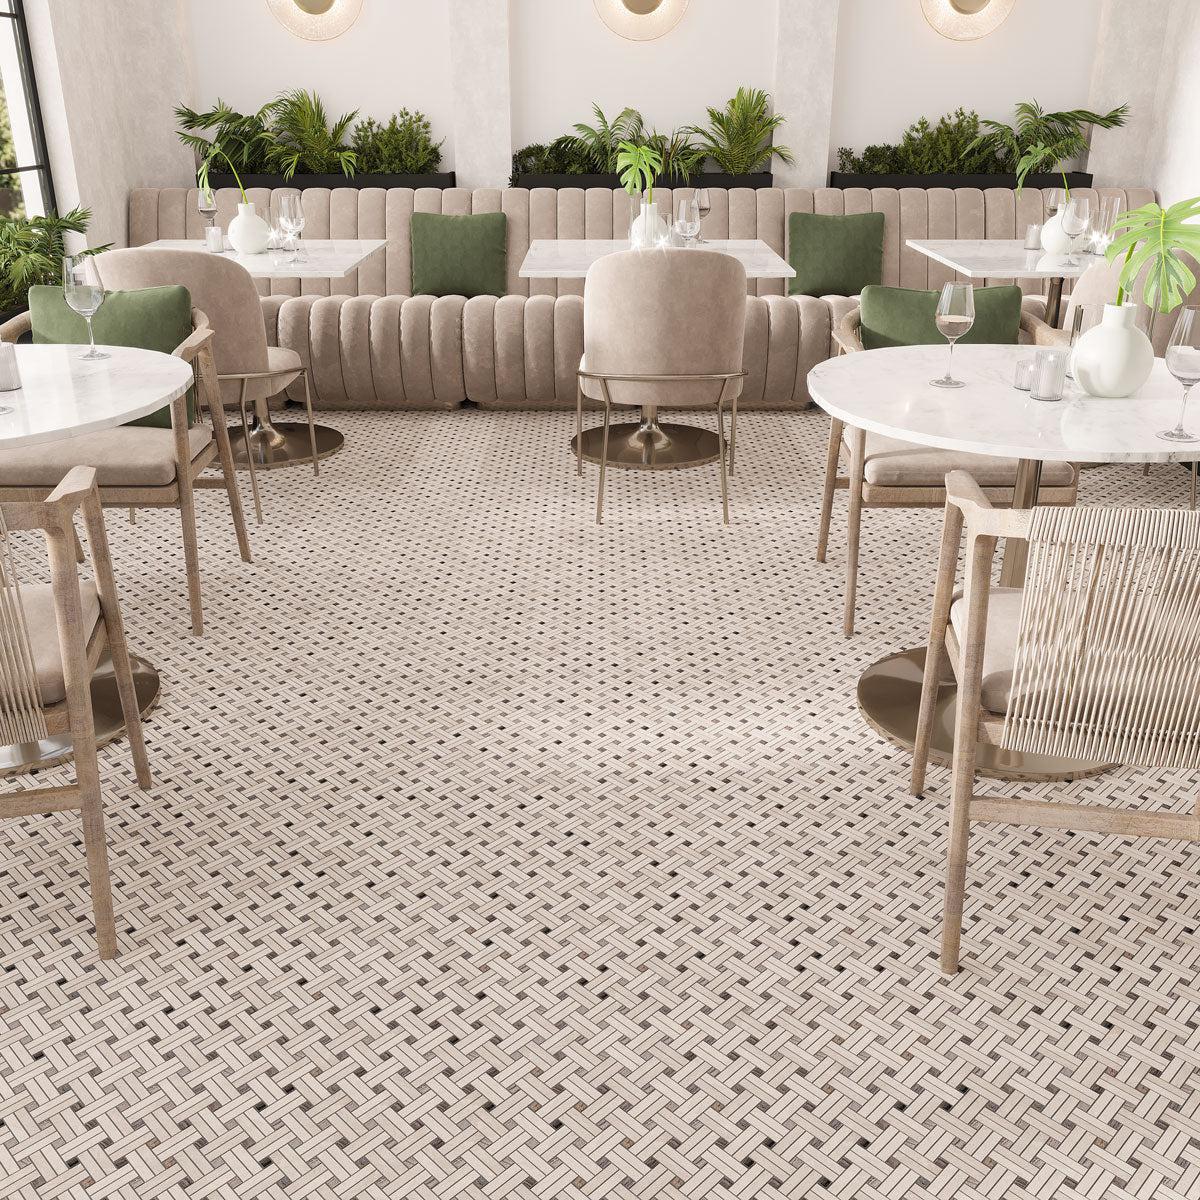 Restaurant floor with beige marble basket weave tiles for a commercial build